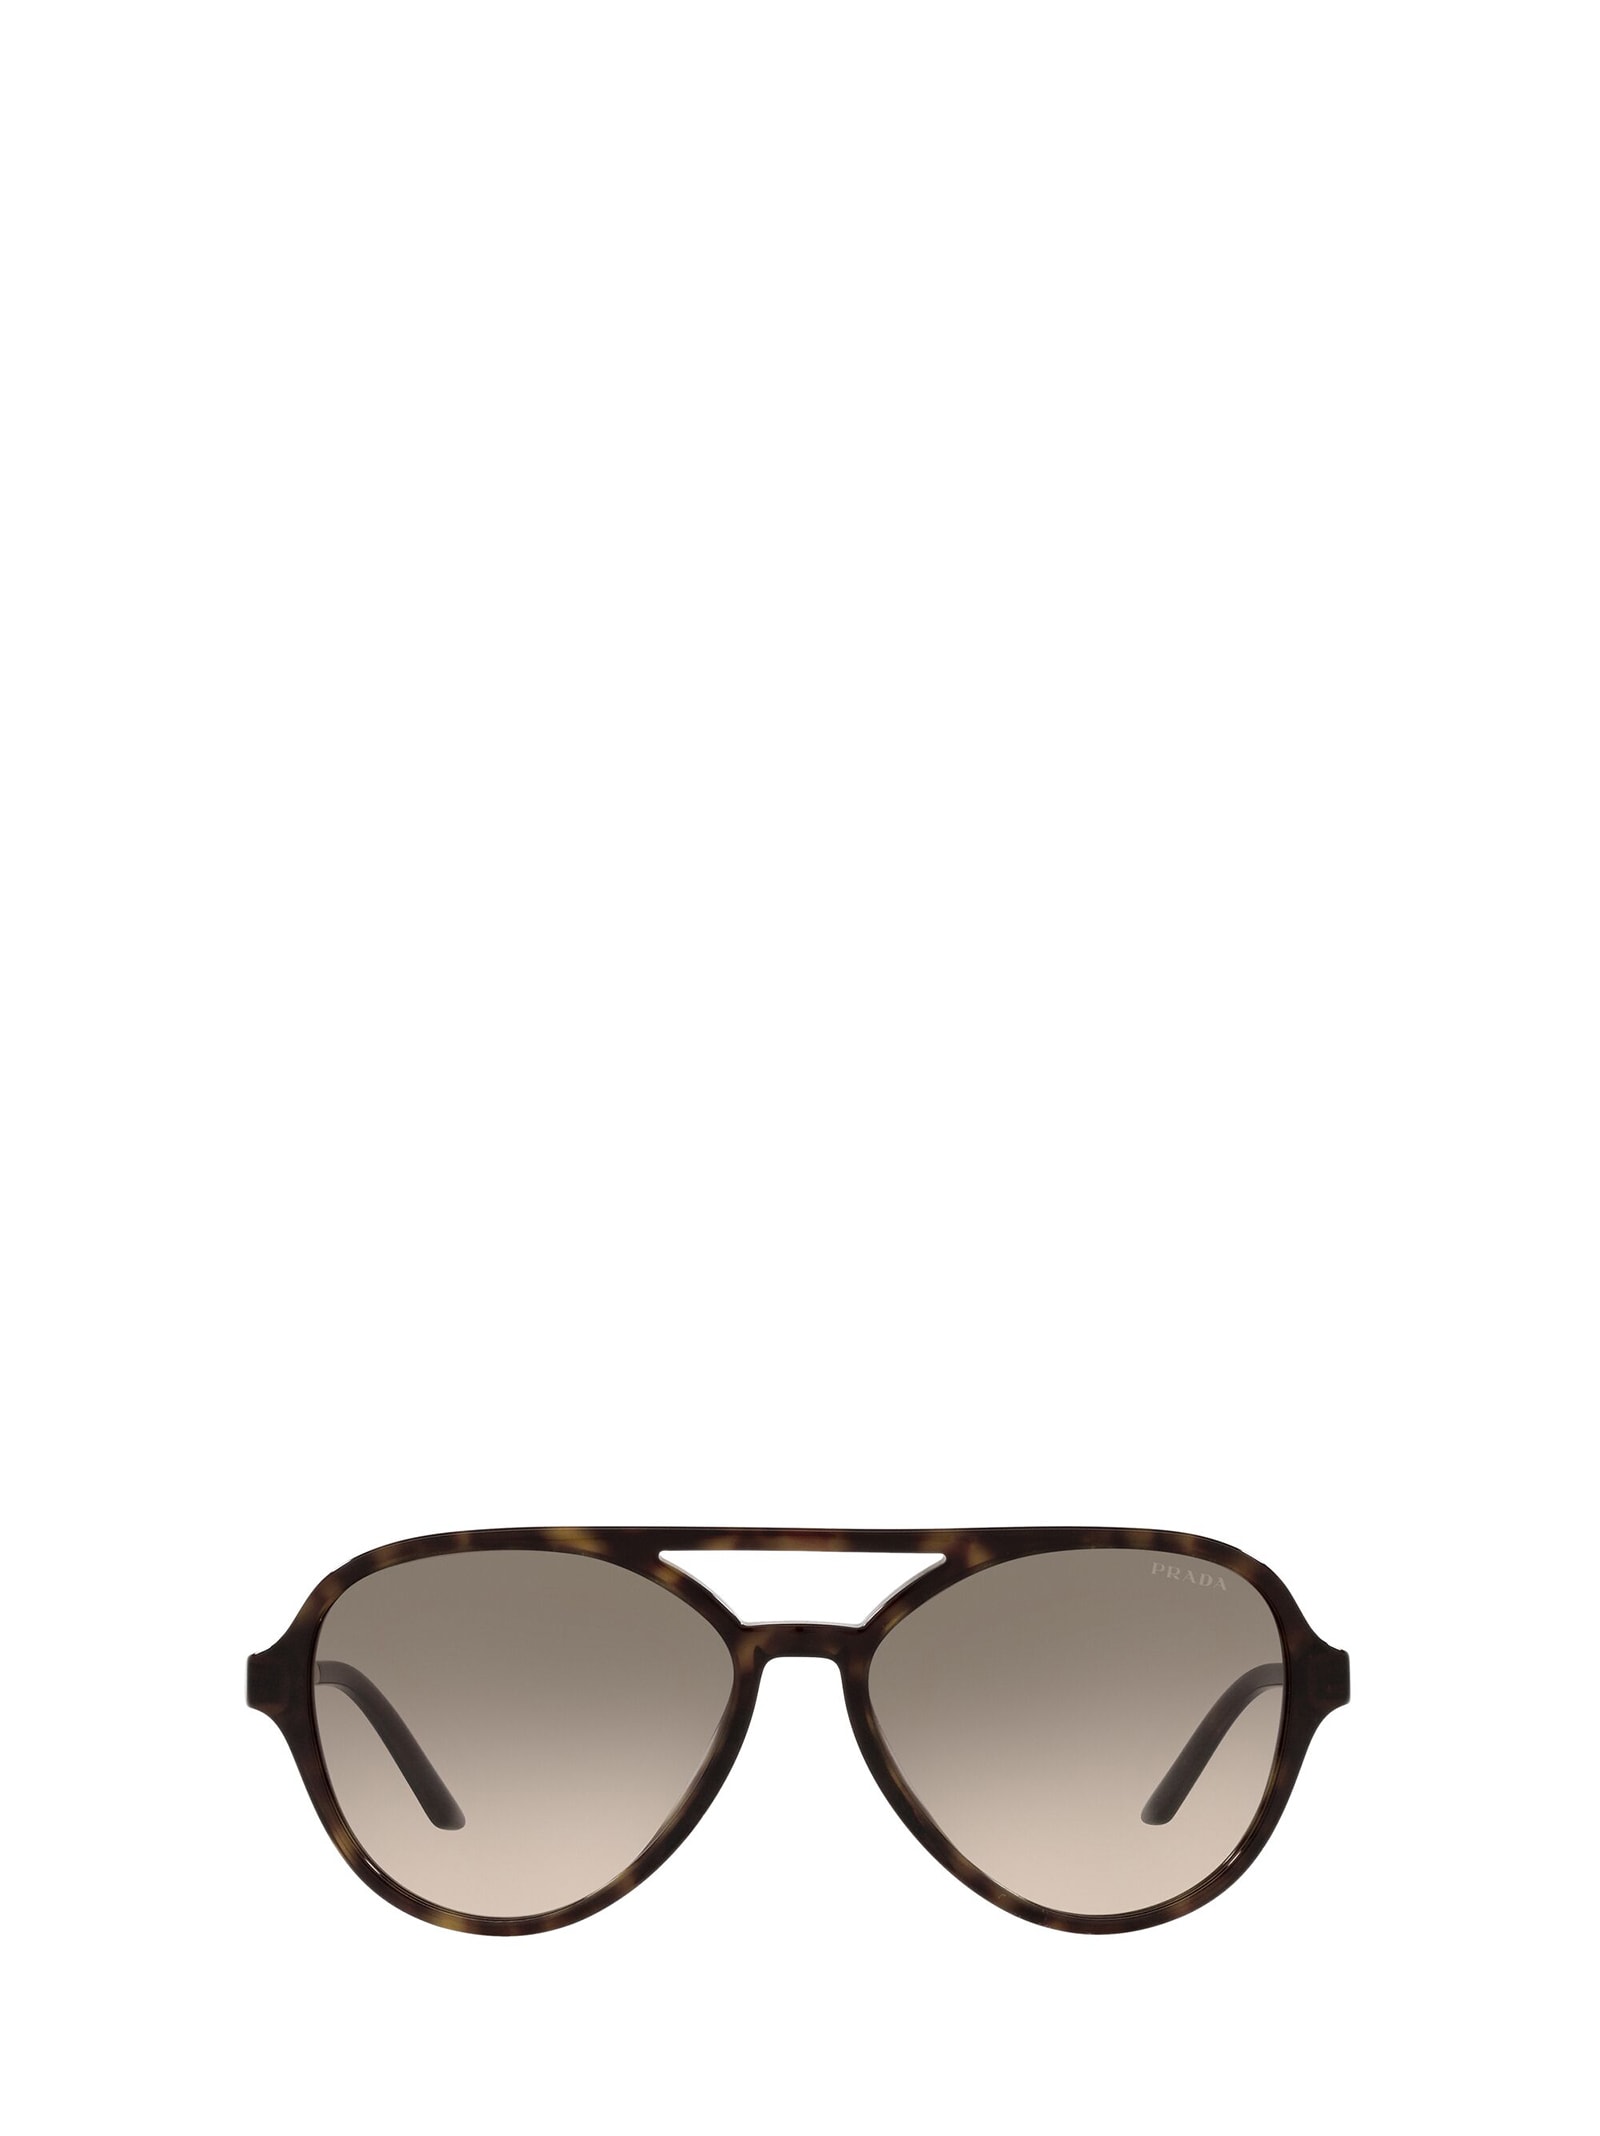 Prada Prada Pr 13ws Tortoise Sunglasses